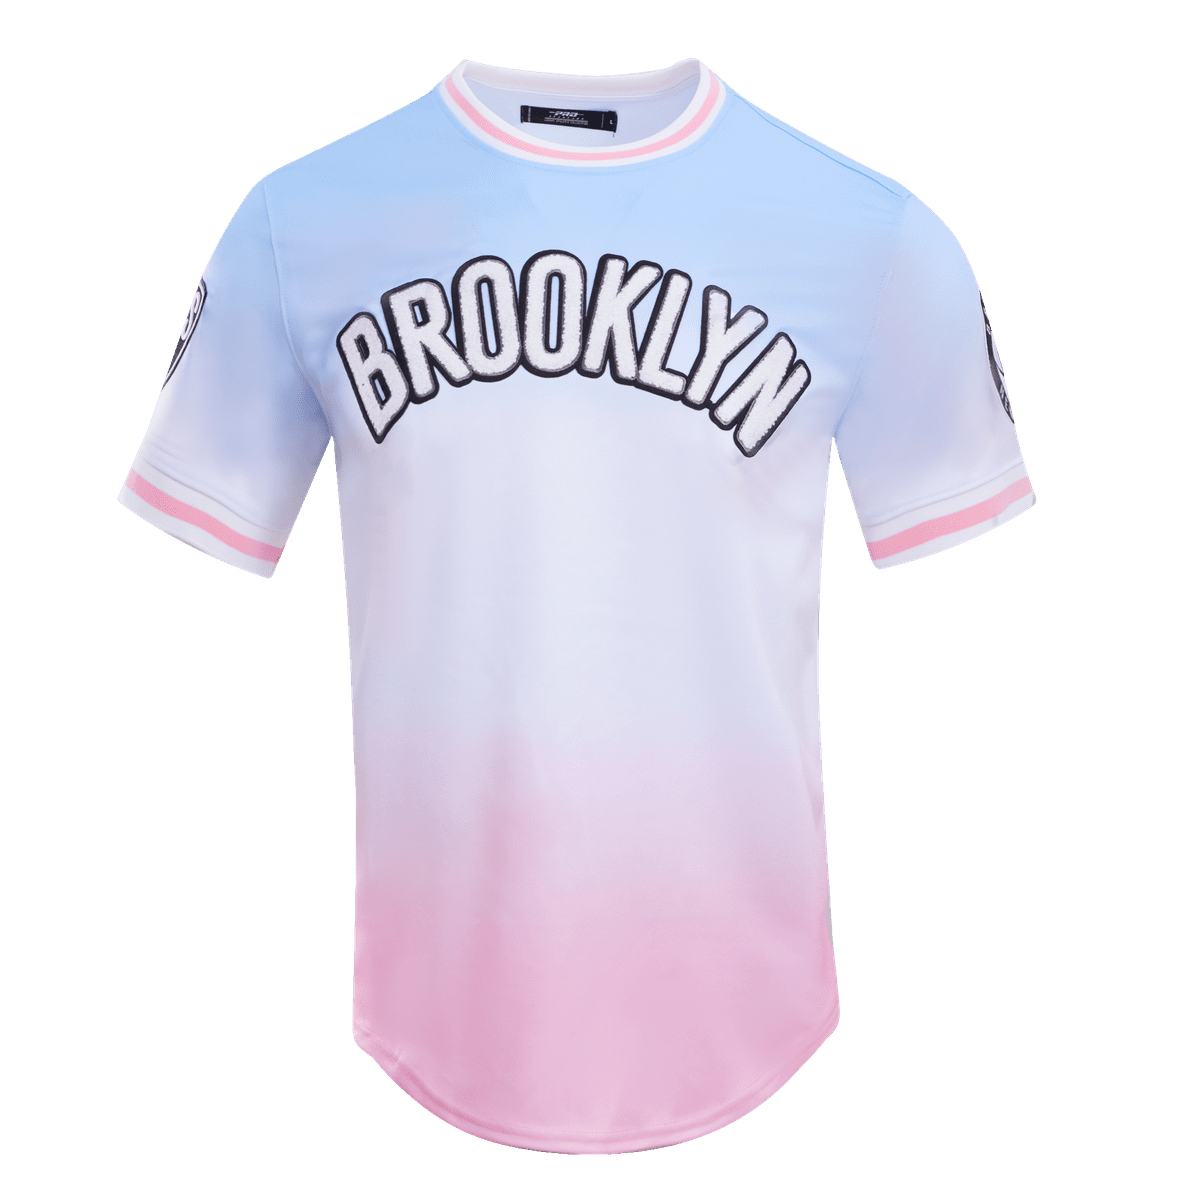 Brooklyn Nets T-Shirts in Brooklyn Nets Team Shop 